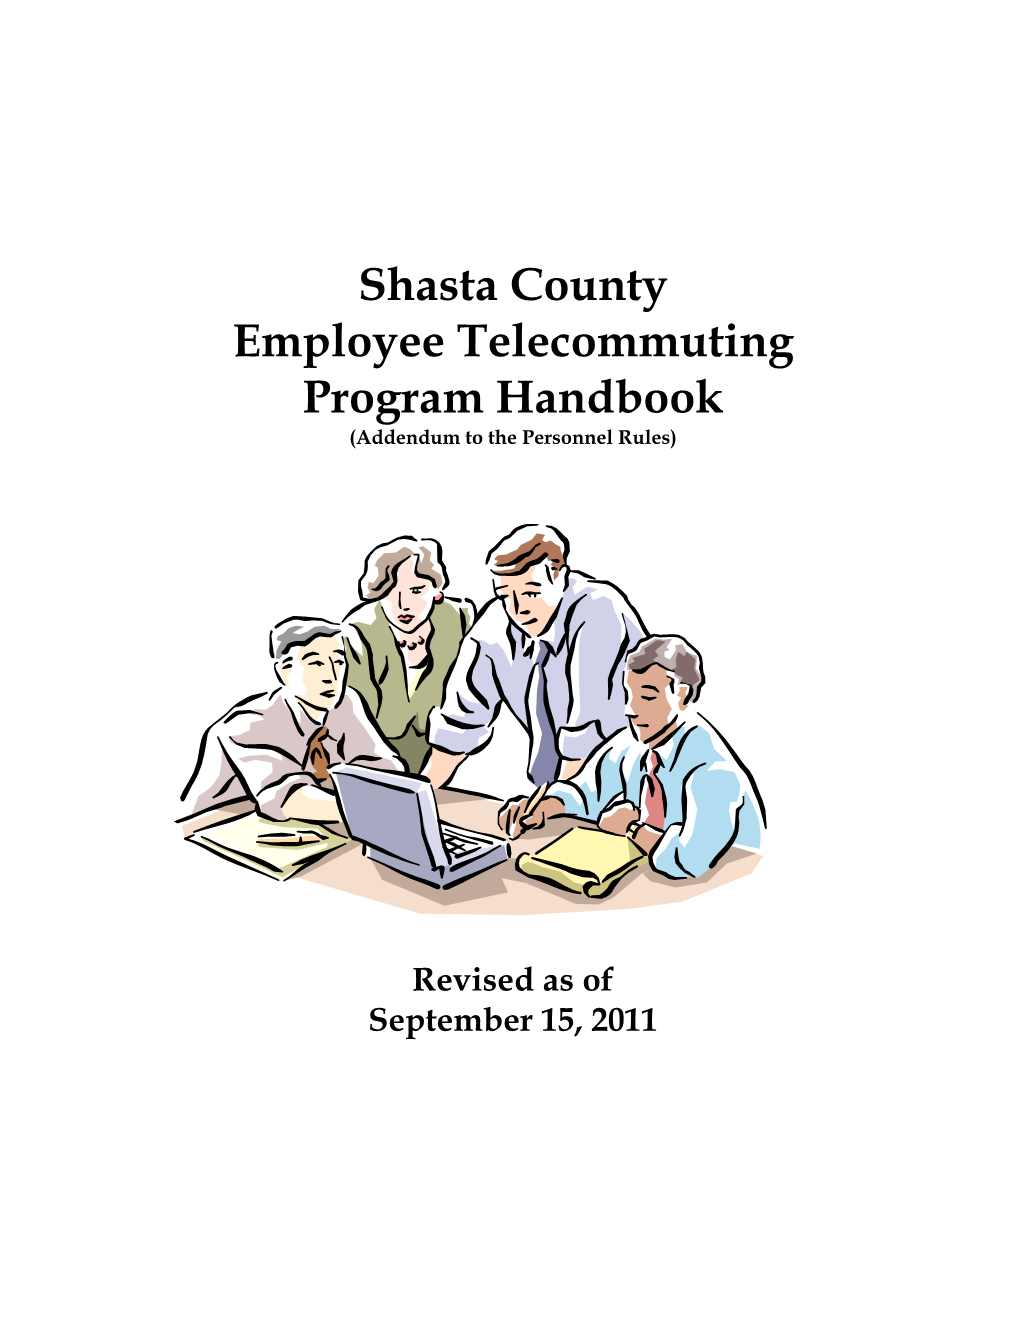 Shasta County Employee Telecommuting Program Handbook (Addendum to the Personnel Rules)